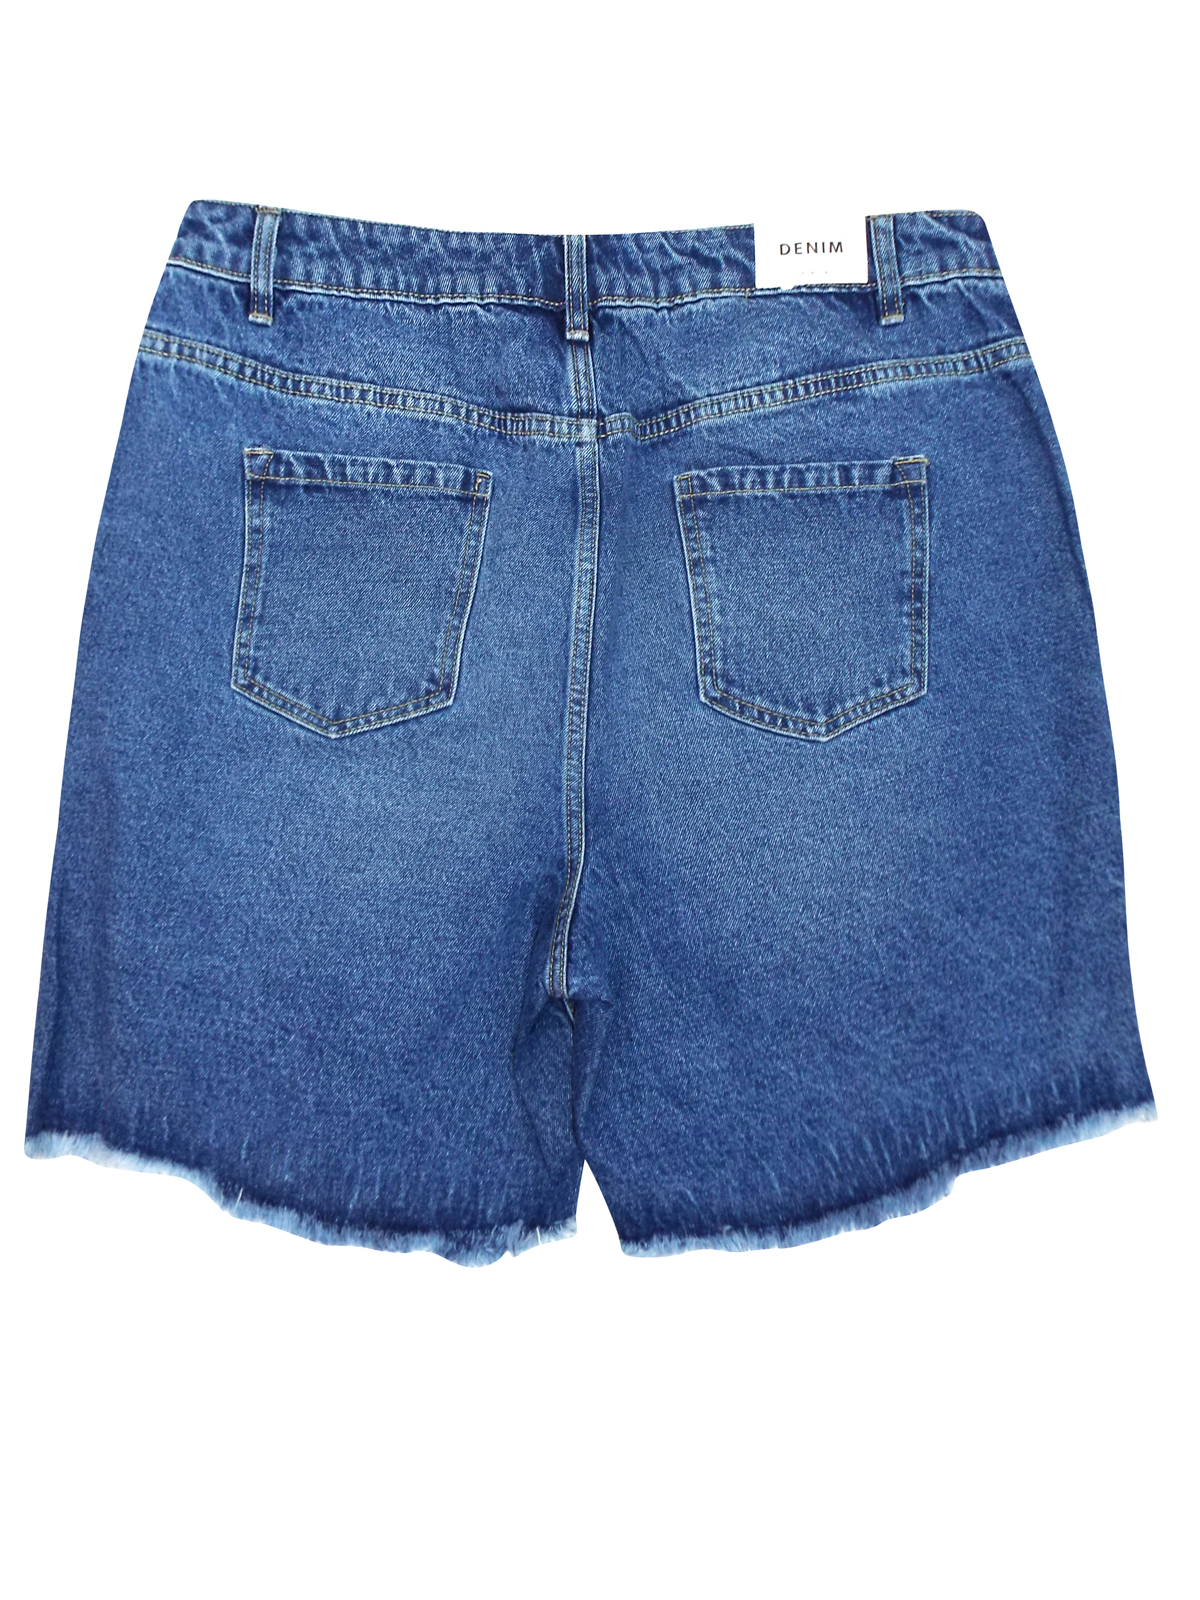 N3w L00k Curve BLUE Cotton Boyfriend Denim Shorts - Plus Size 18 to 26